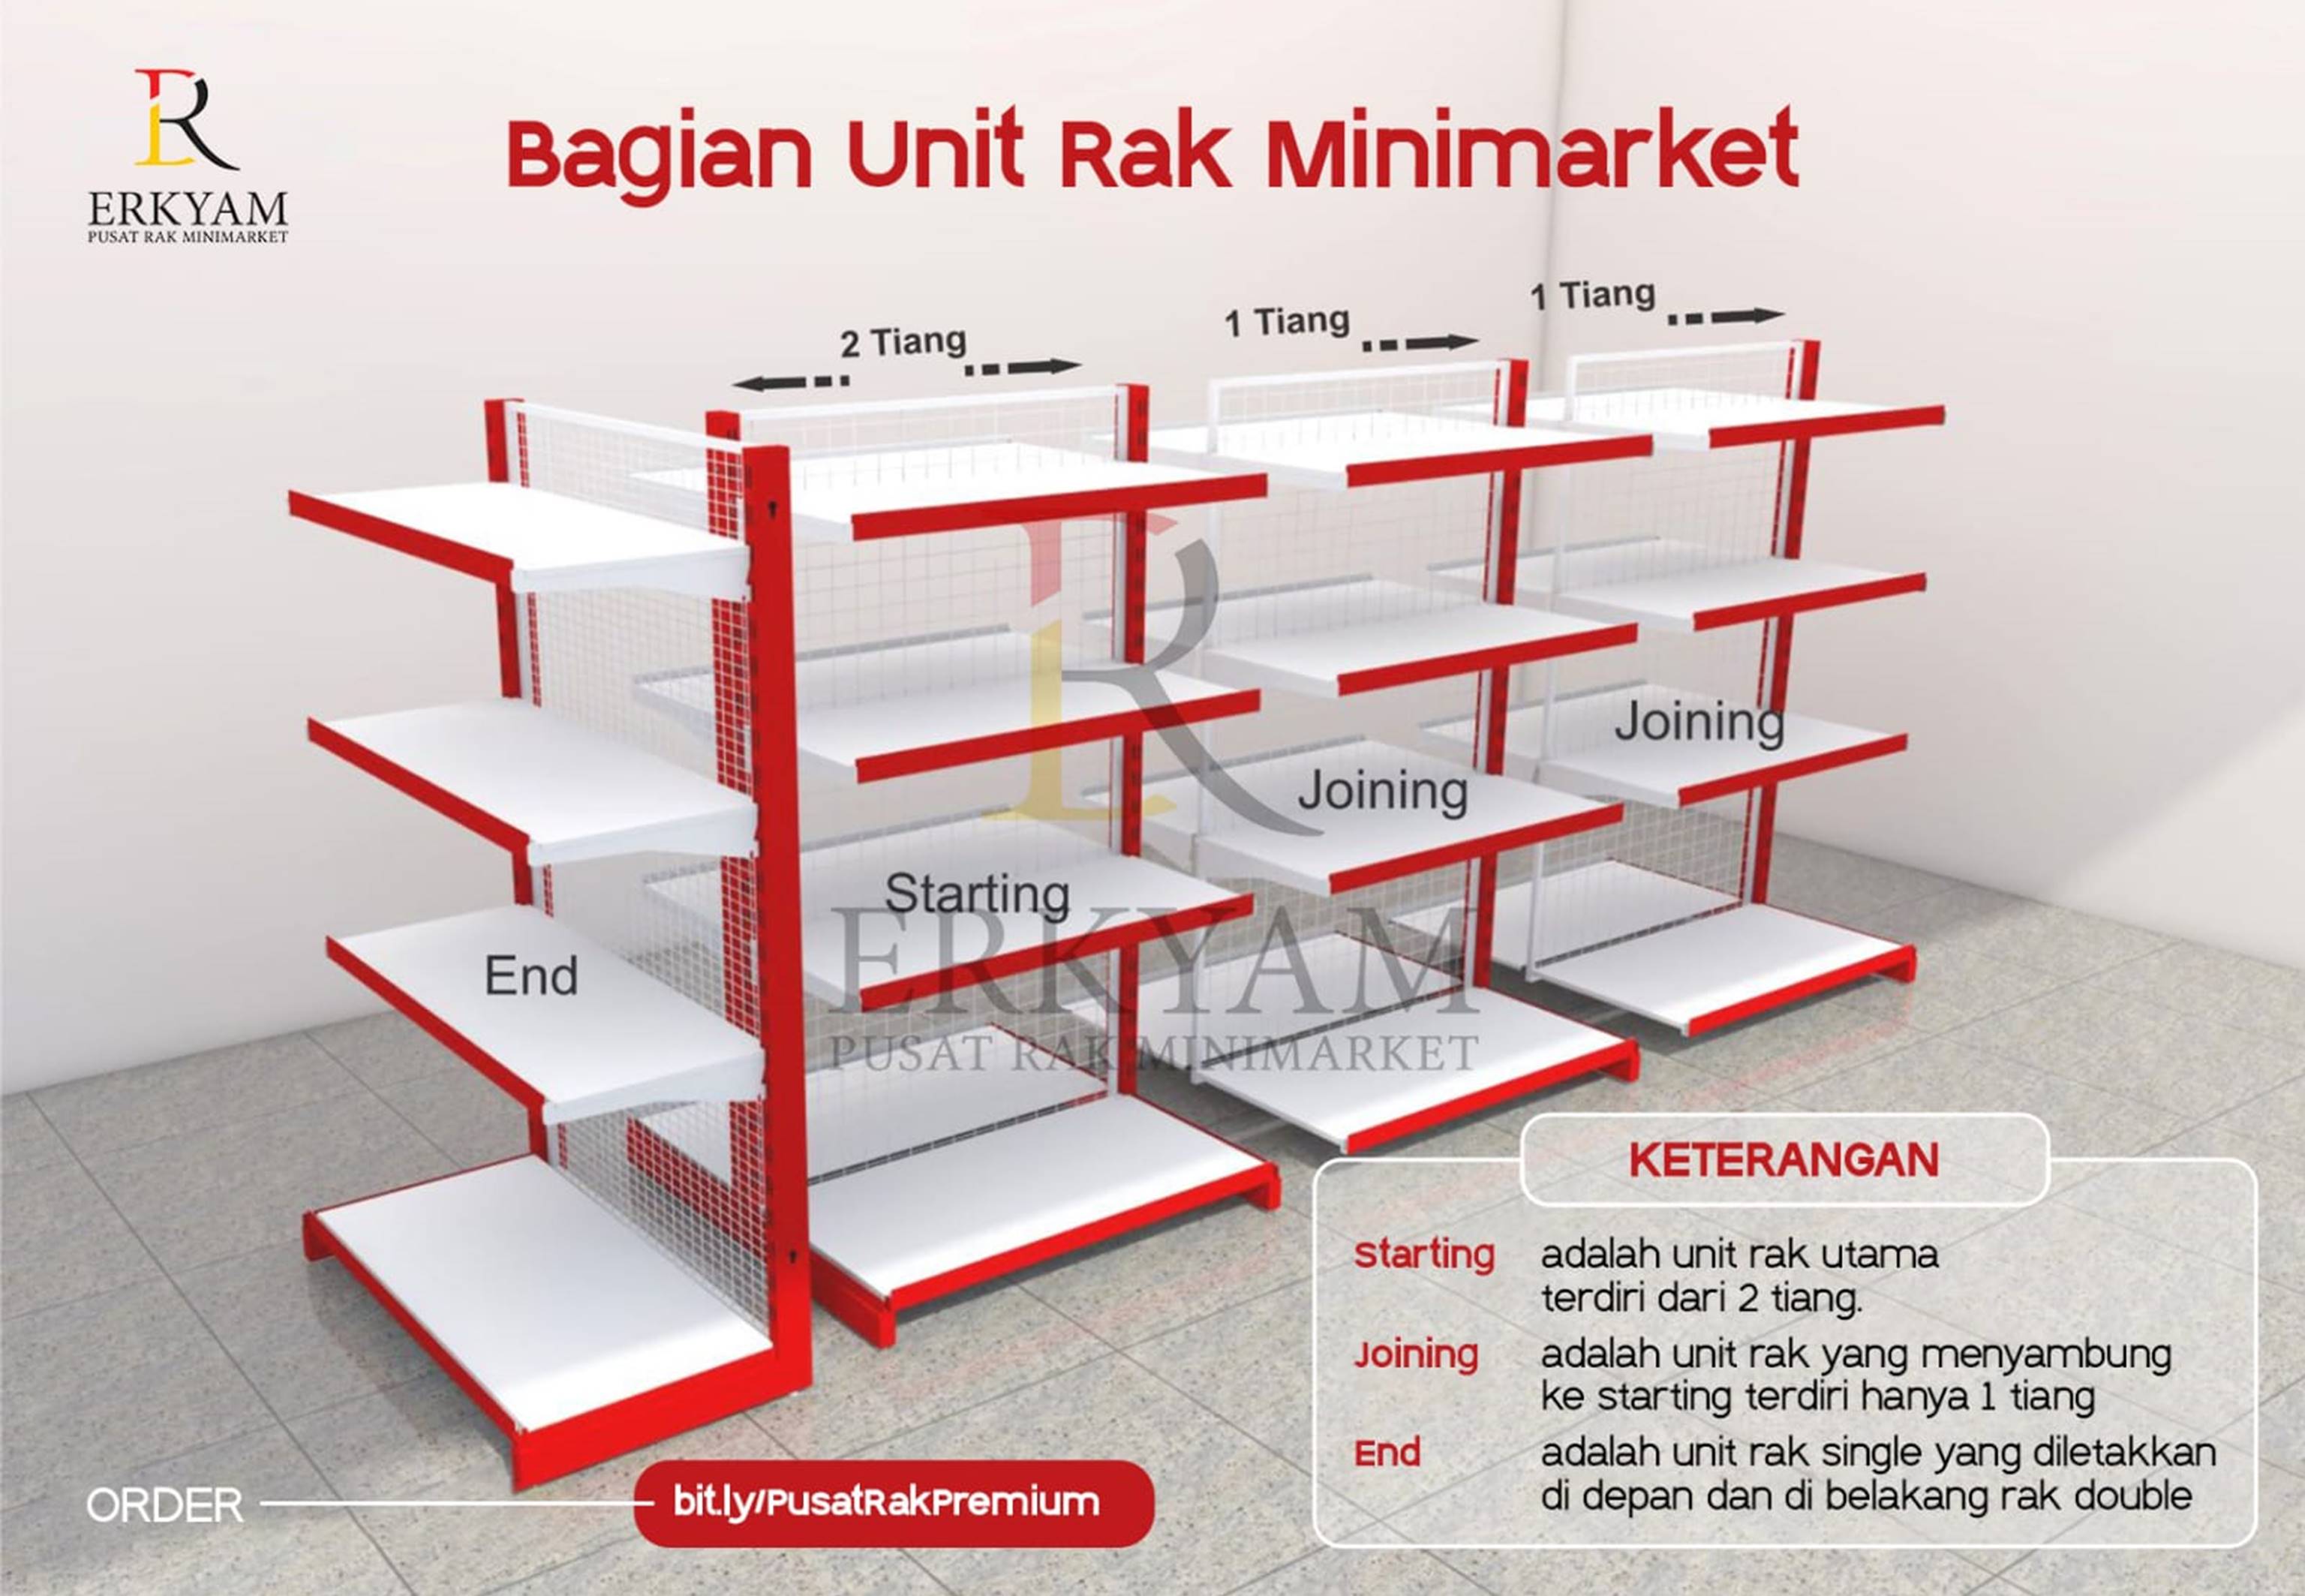 ERKYAM Sentra Grosir Rak Minimarket area Balangan Kalimantan Selatan